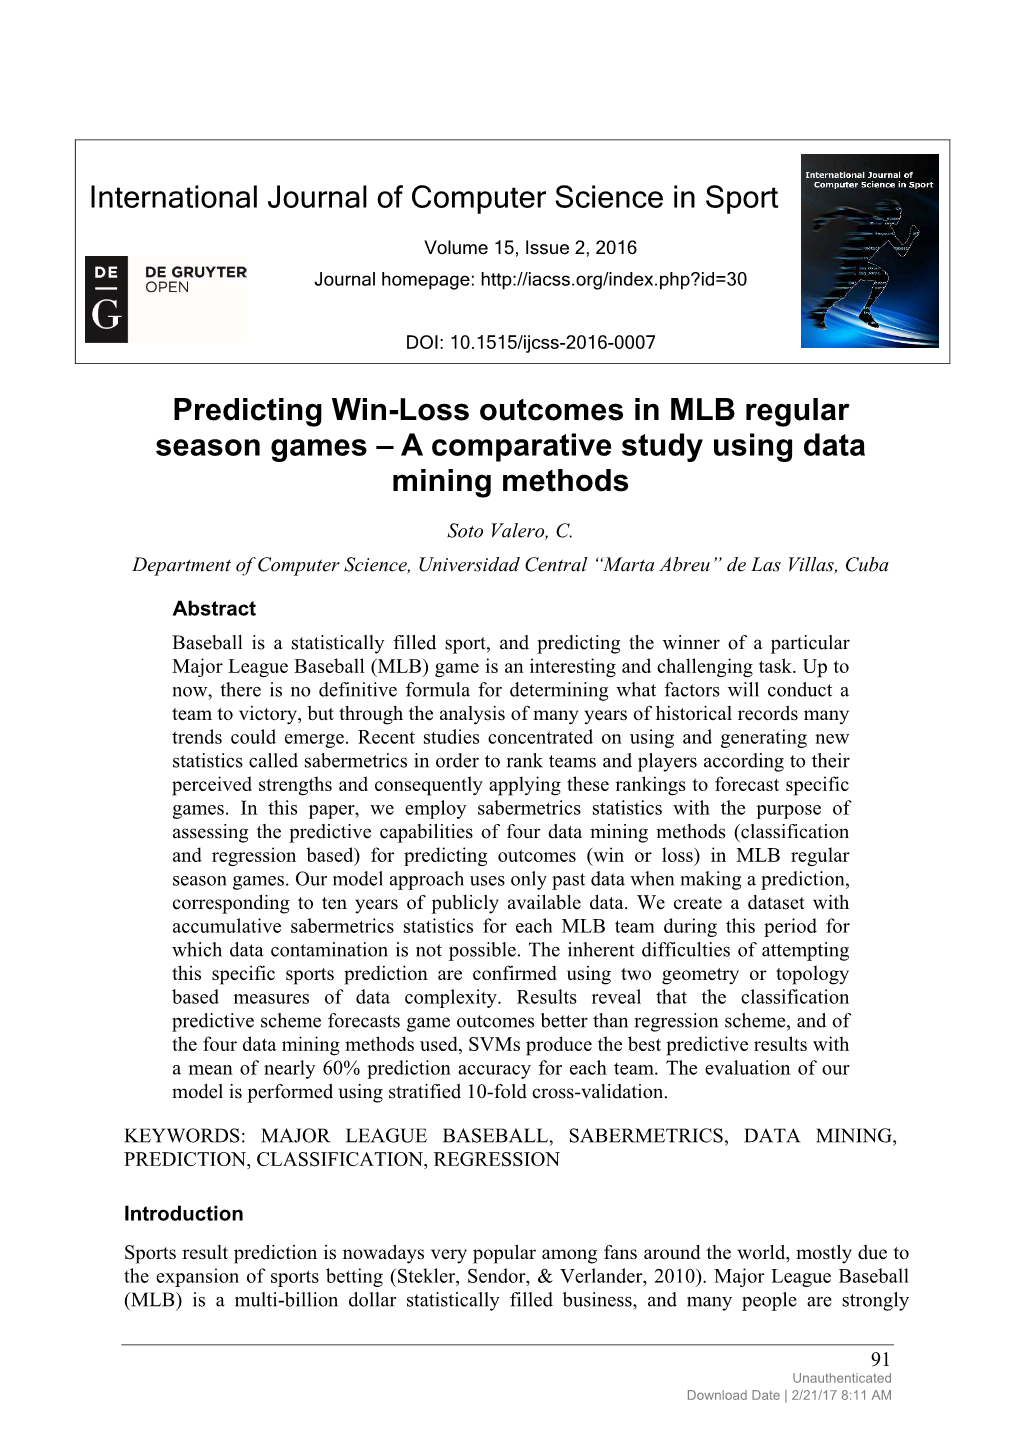 Predicting Win-Loss Outcomes in MLB Regular Season Games–A Comparative Study Using Data Mining Methods